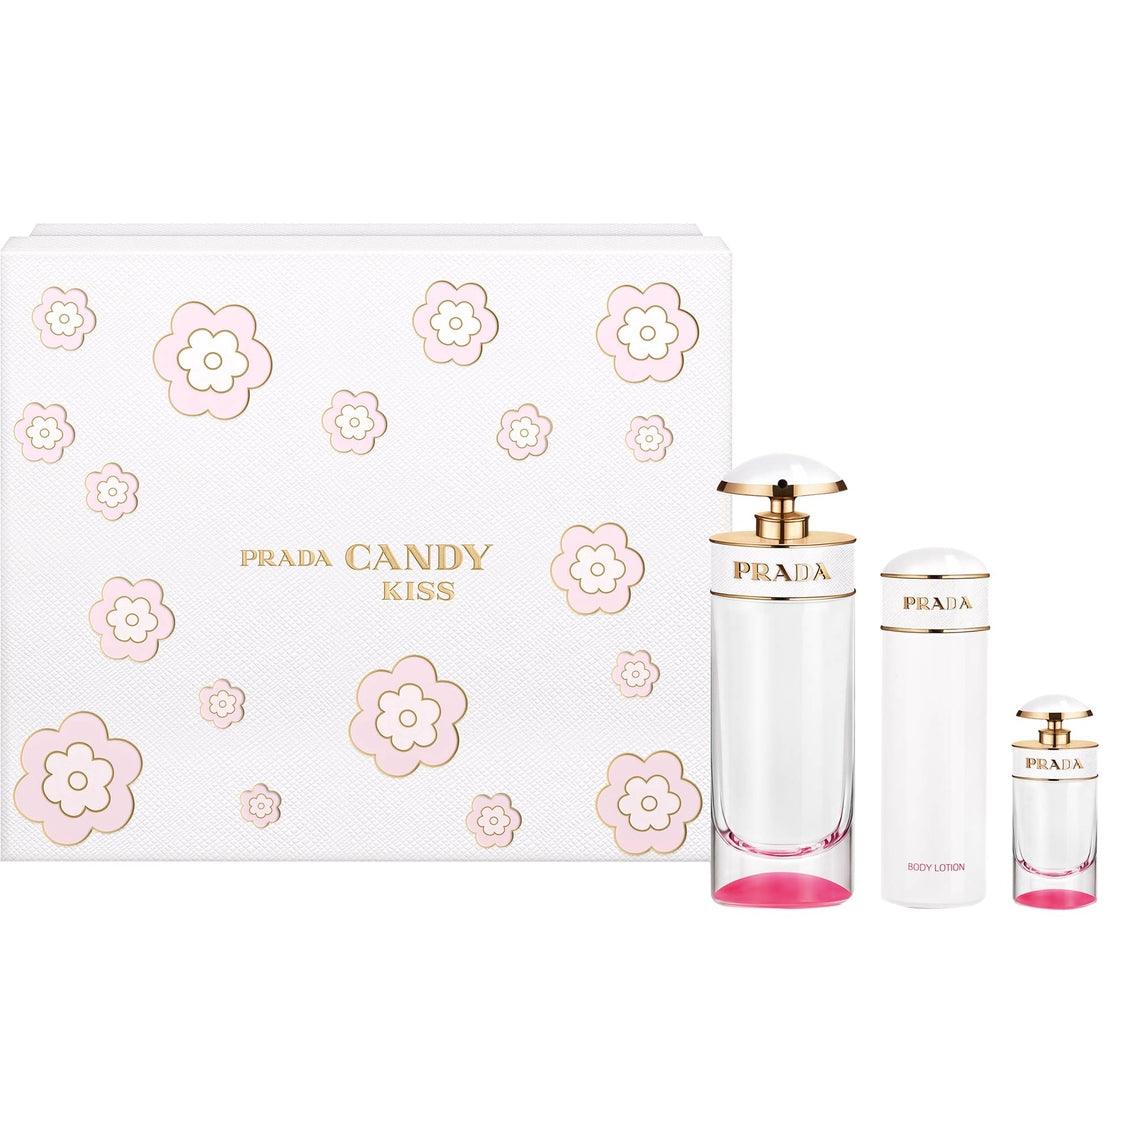 Prada Candy Kiss Set - Parfum Gallerie